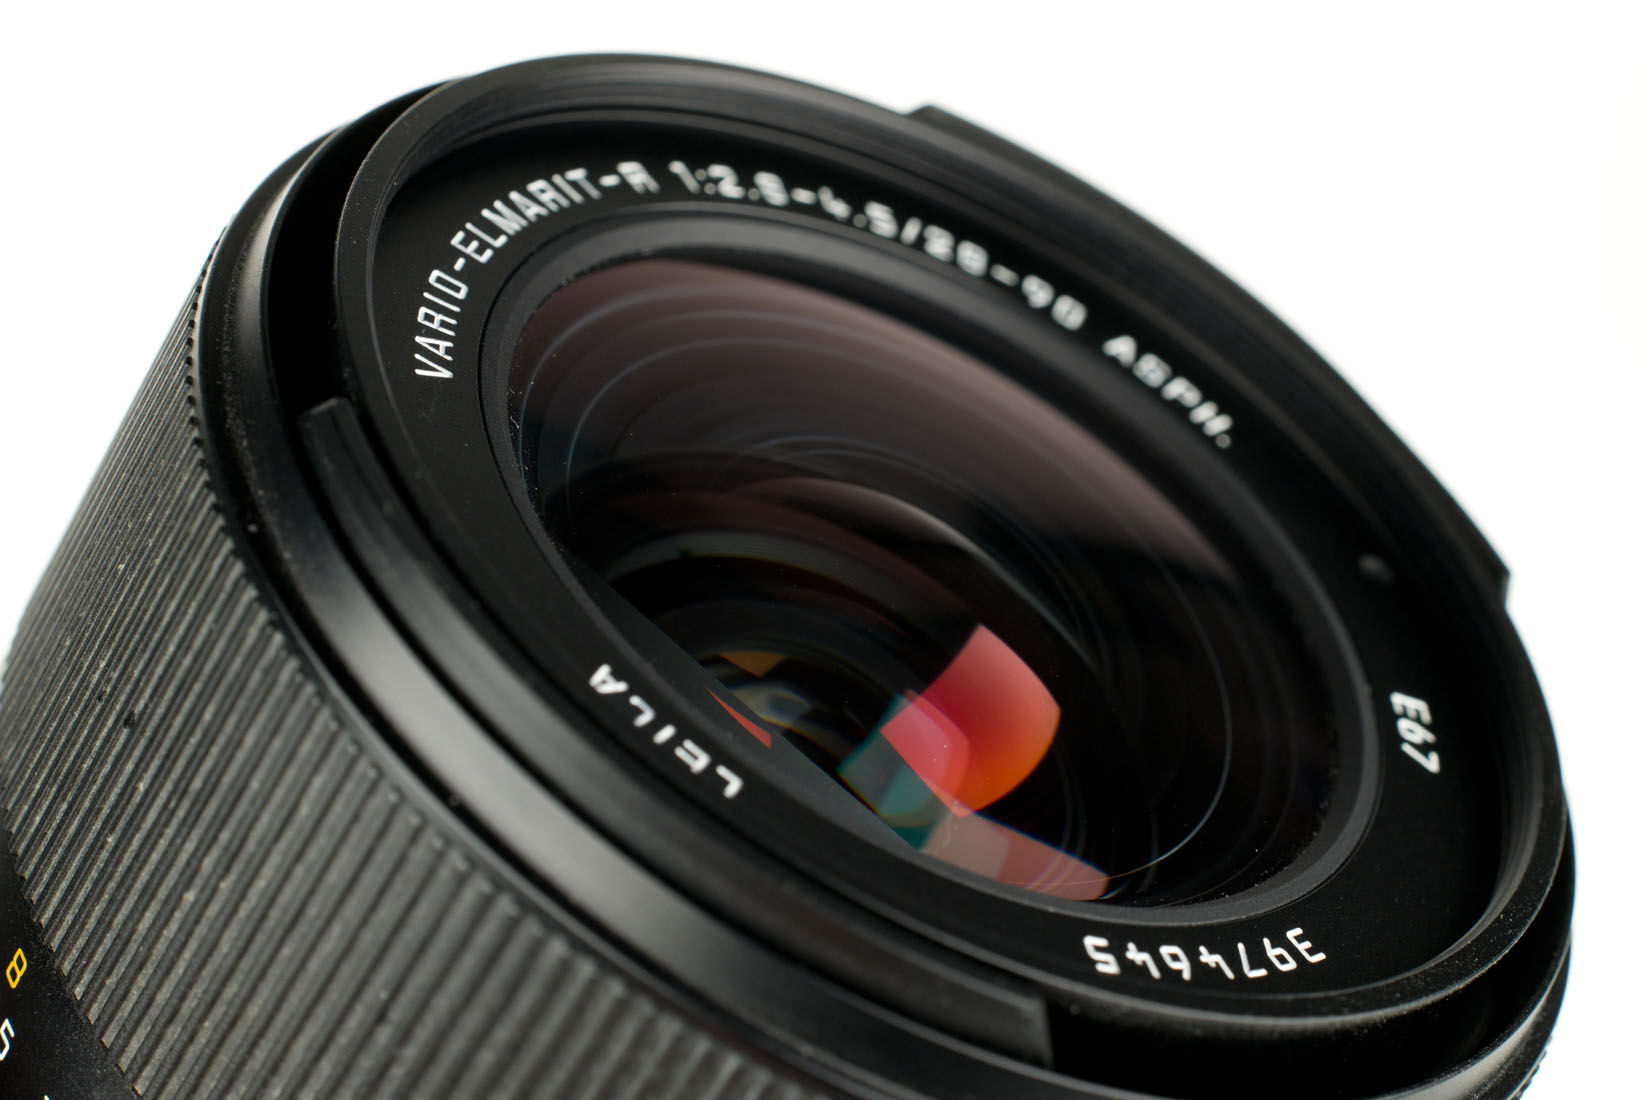 Leica Vario-Elmarit-R 1:2.8-4,5/28-90mm ASPH. 11365